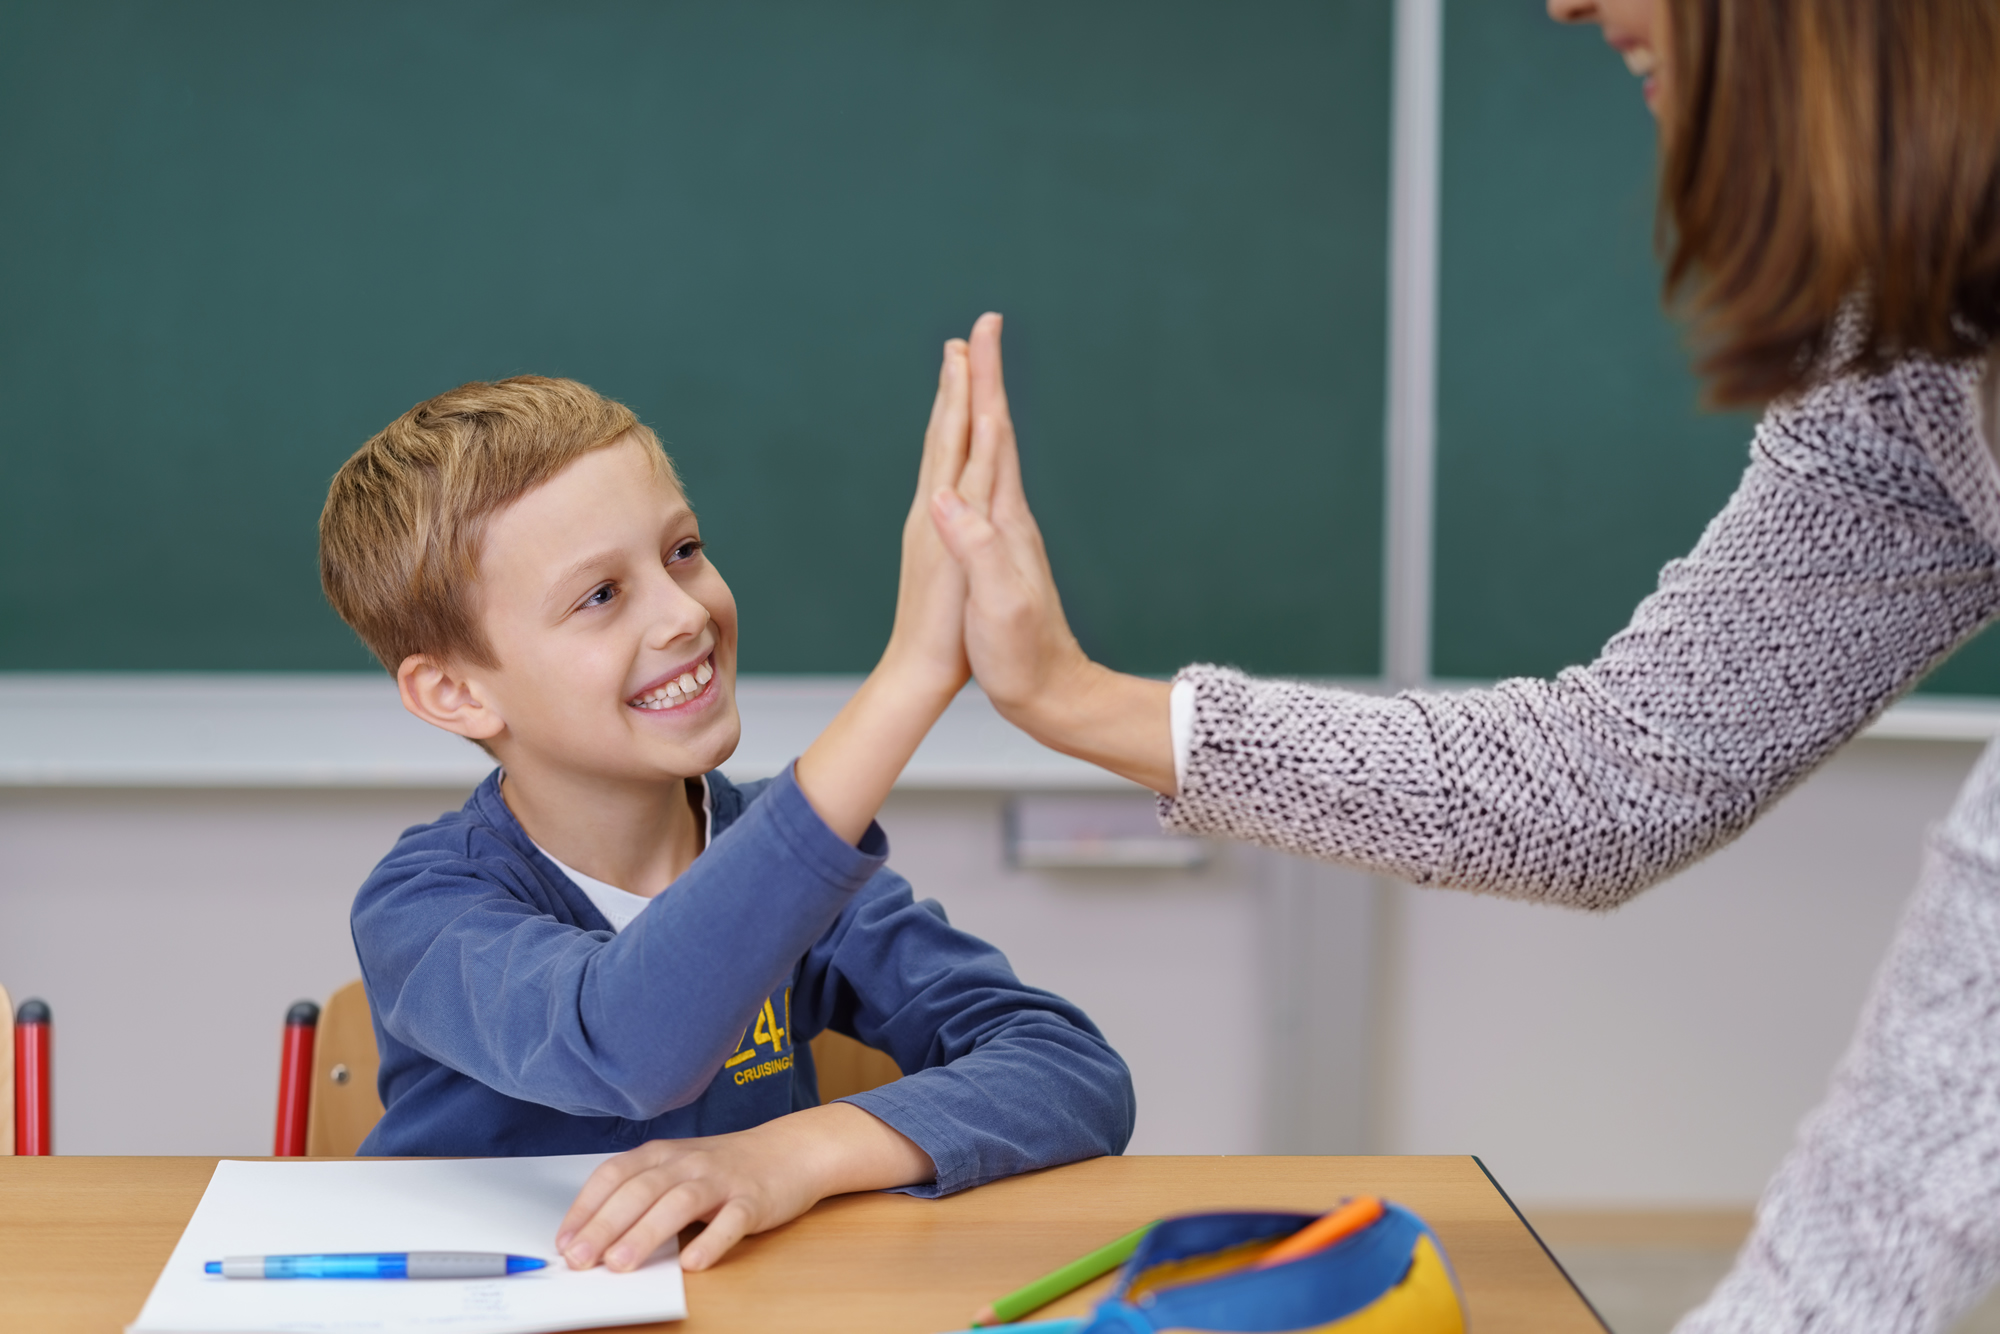 Teacher helps student